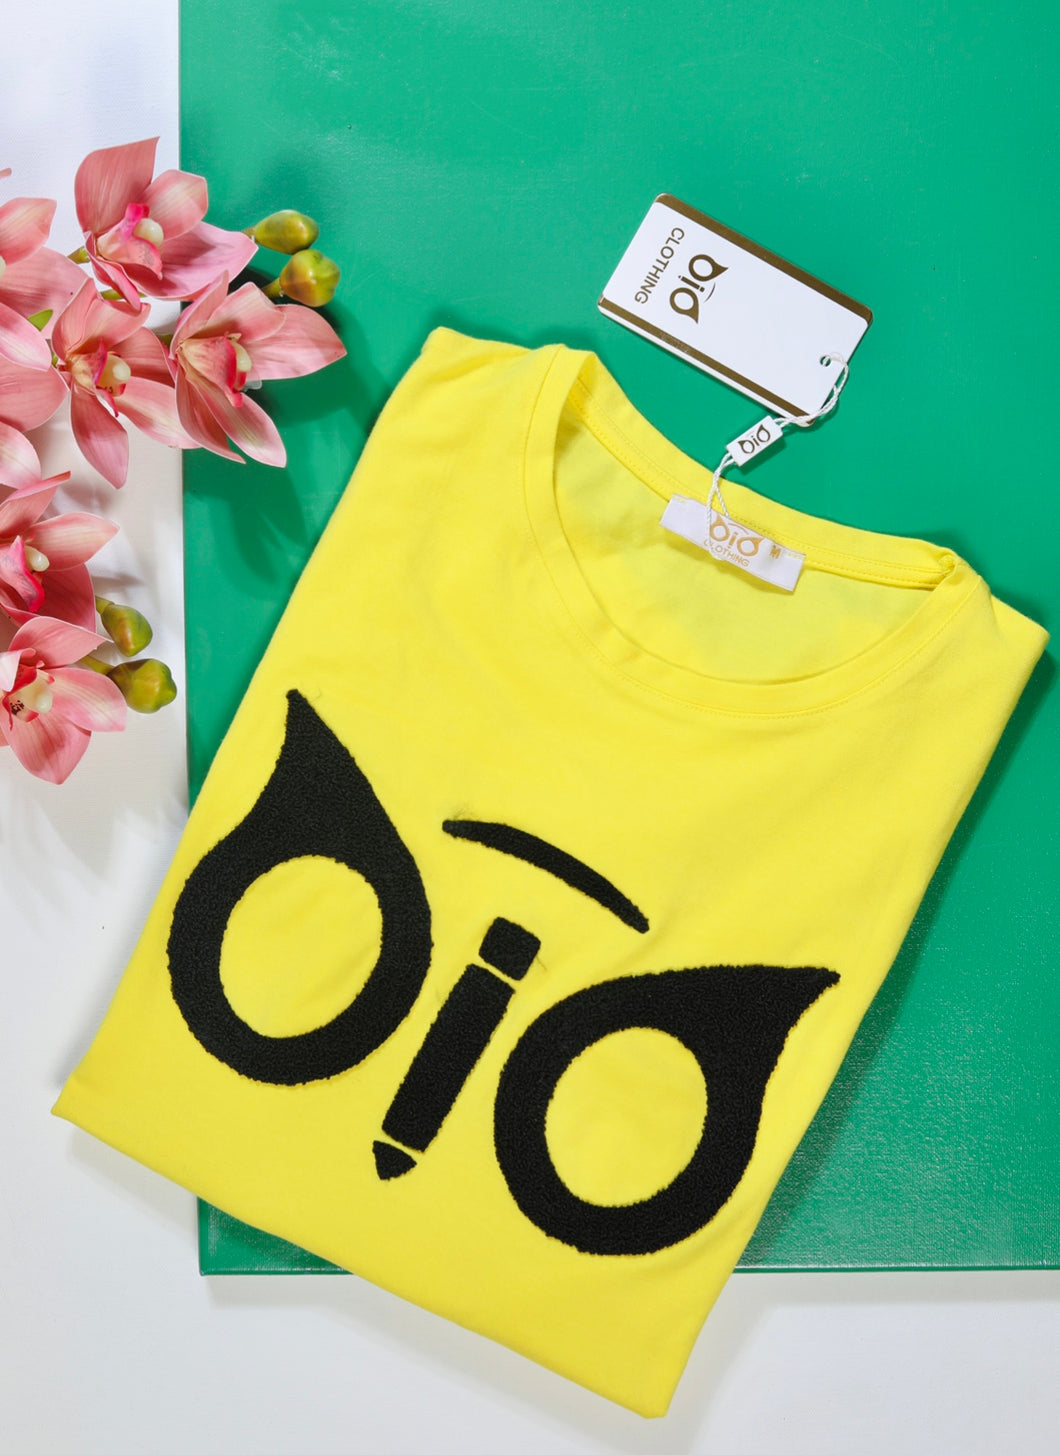 T-Shirt OiO SE Plush Cloth Yellow & Black